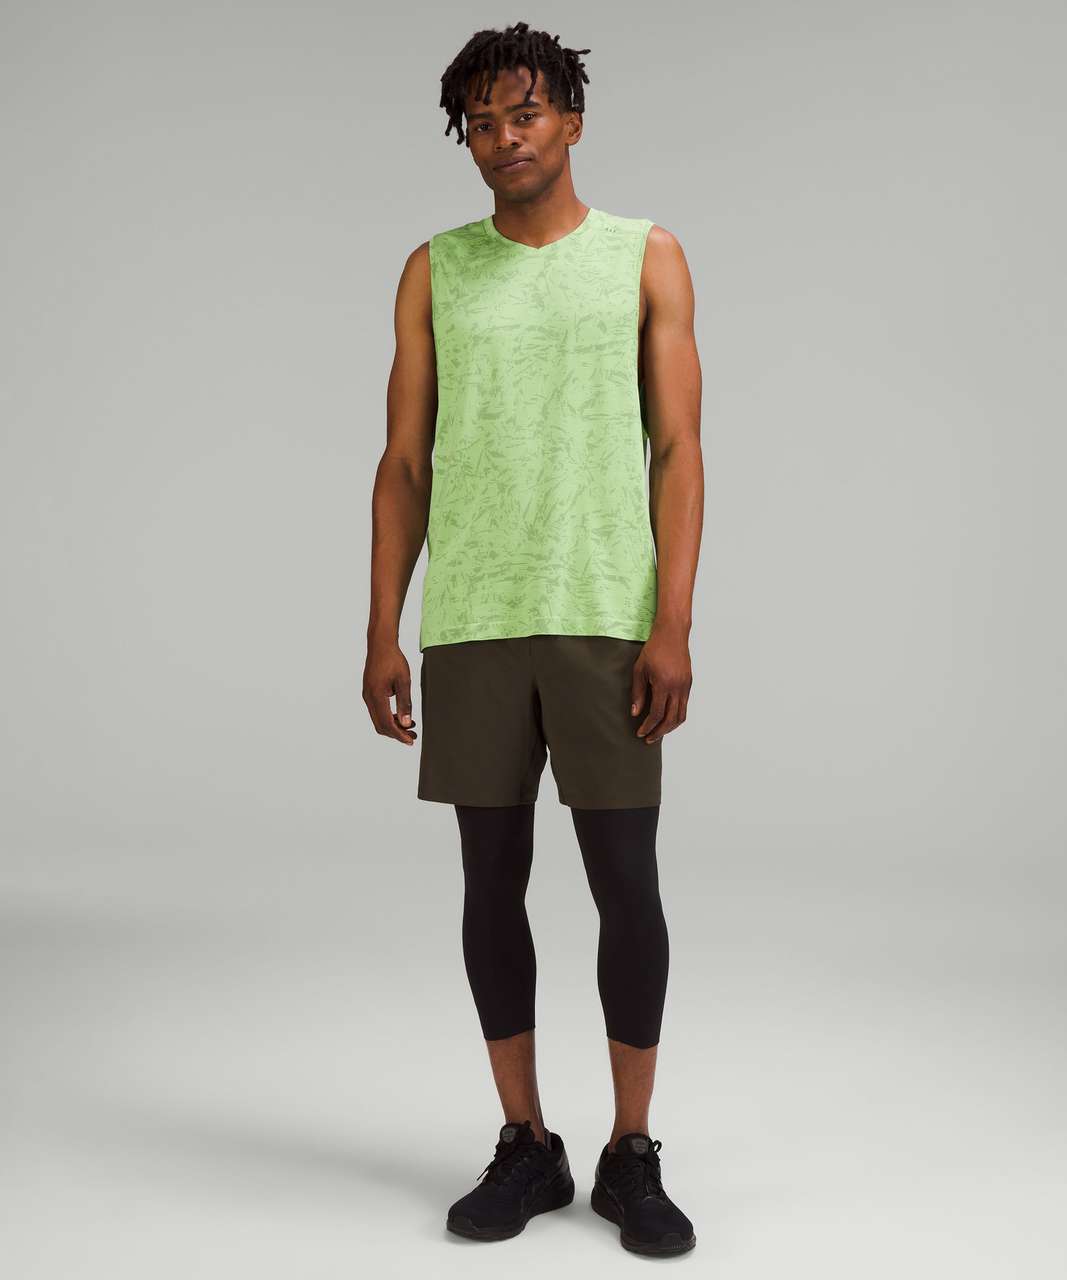 Lululemon Metal Vent Tech Sleeveless Shirt 2.0 - Block Floral Graphite Grey / Scream Green Light